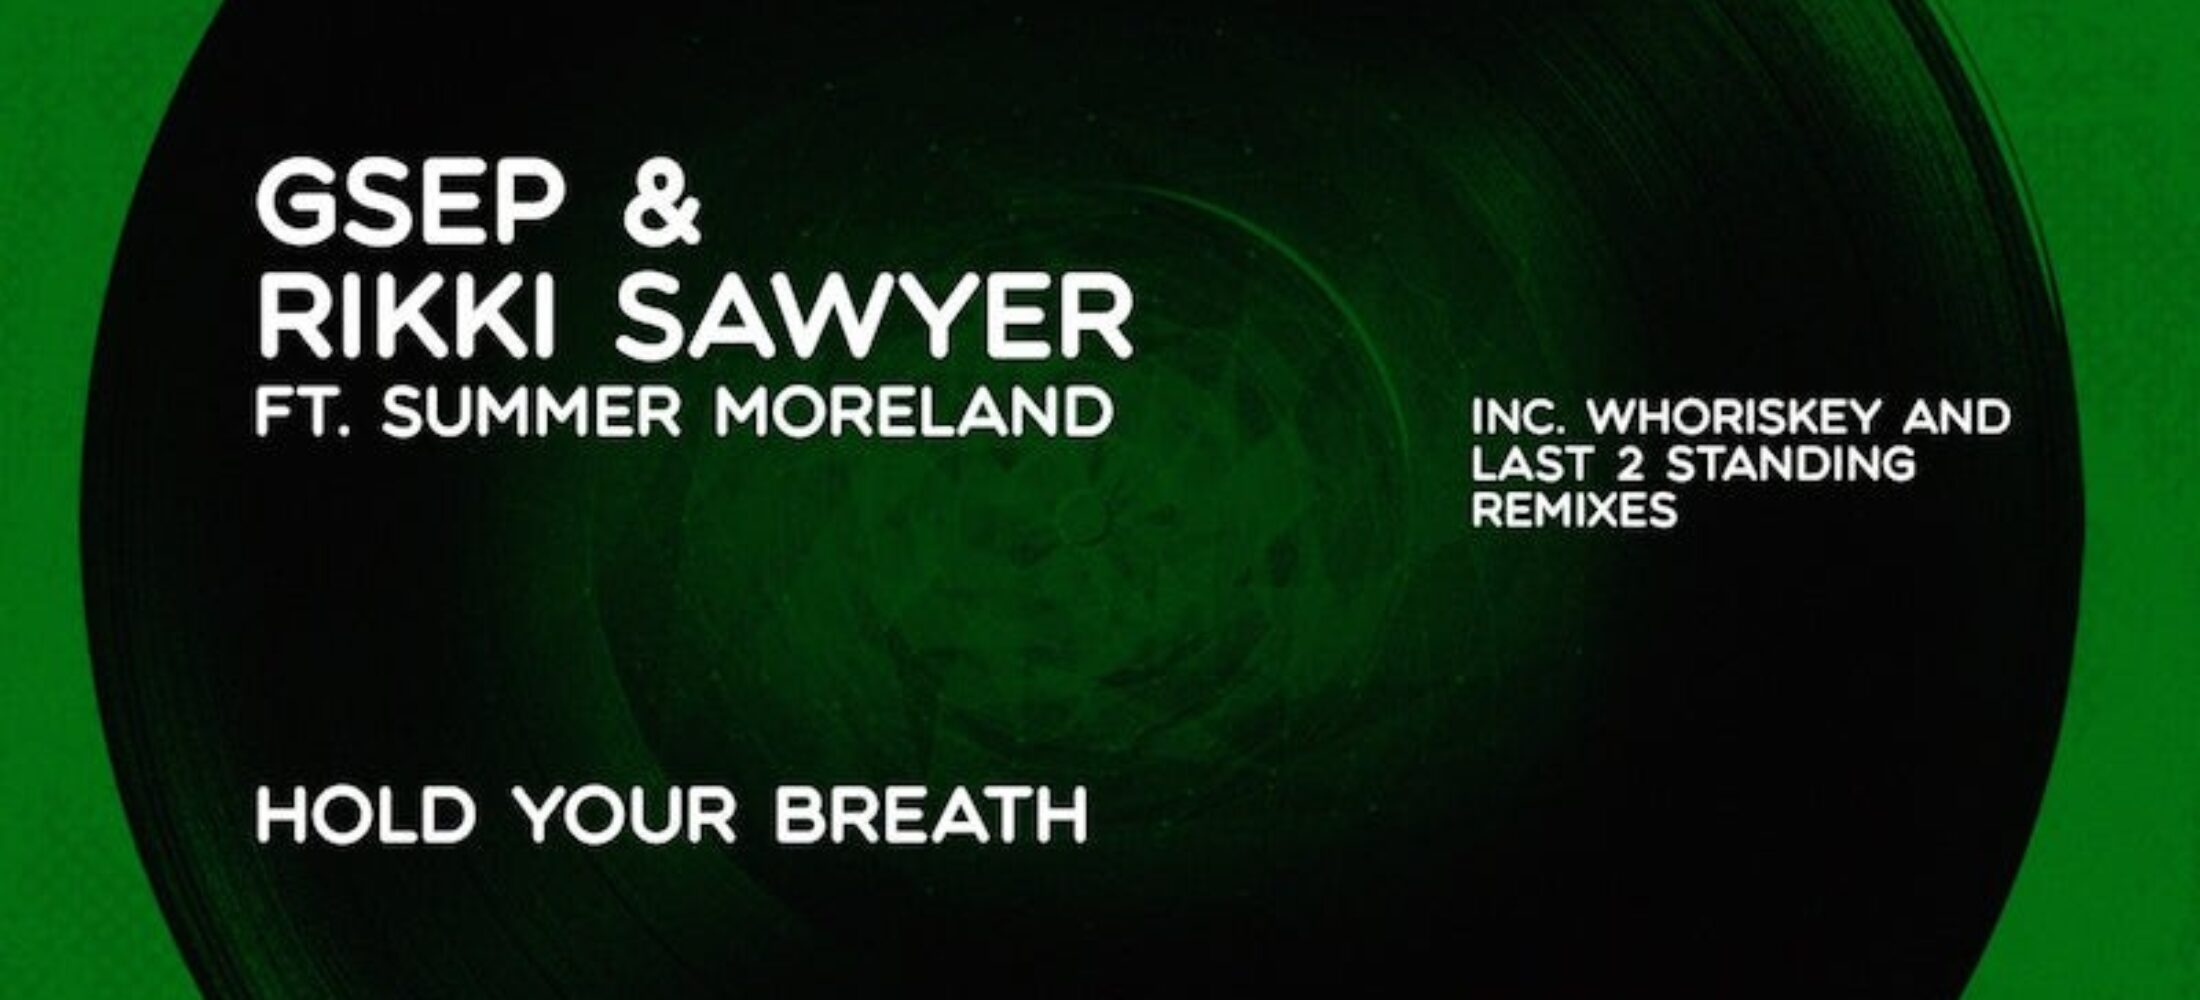 New Release - HOLD YOUR BREATH - GSEP & Rikki Sawyer